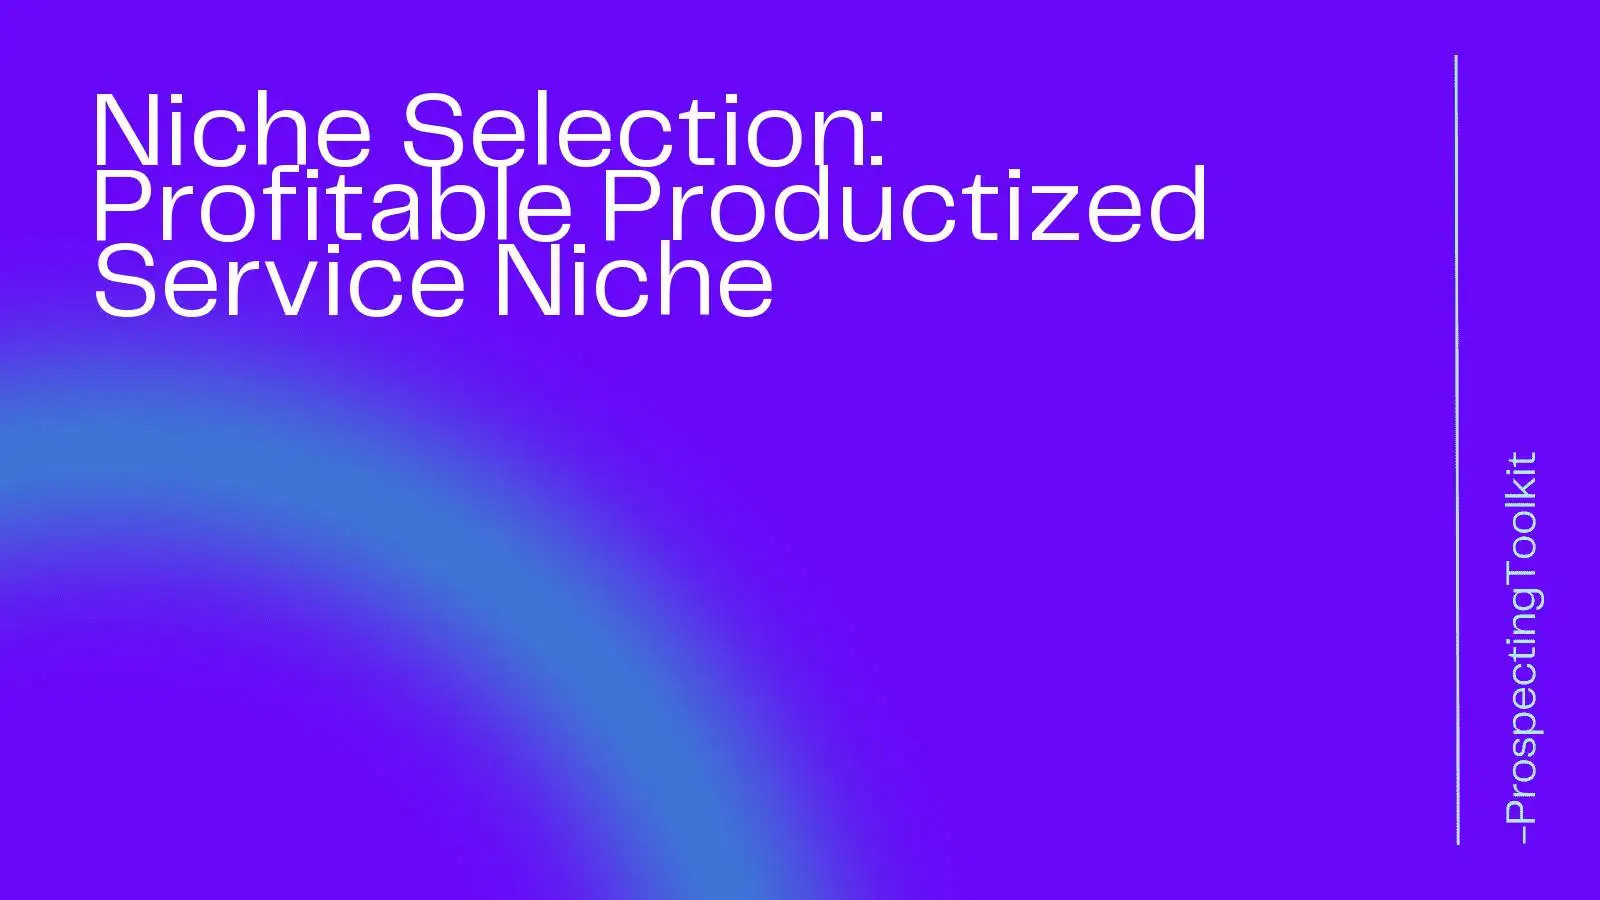 Niche Selection: Profitable Productized Service Niche